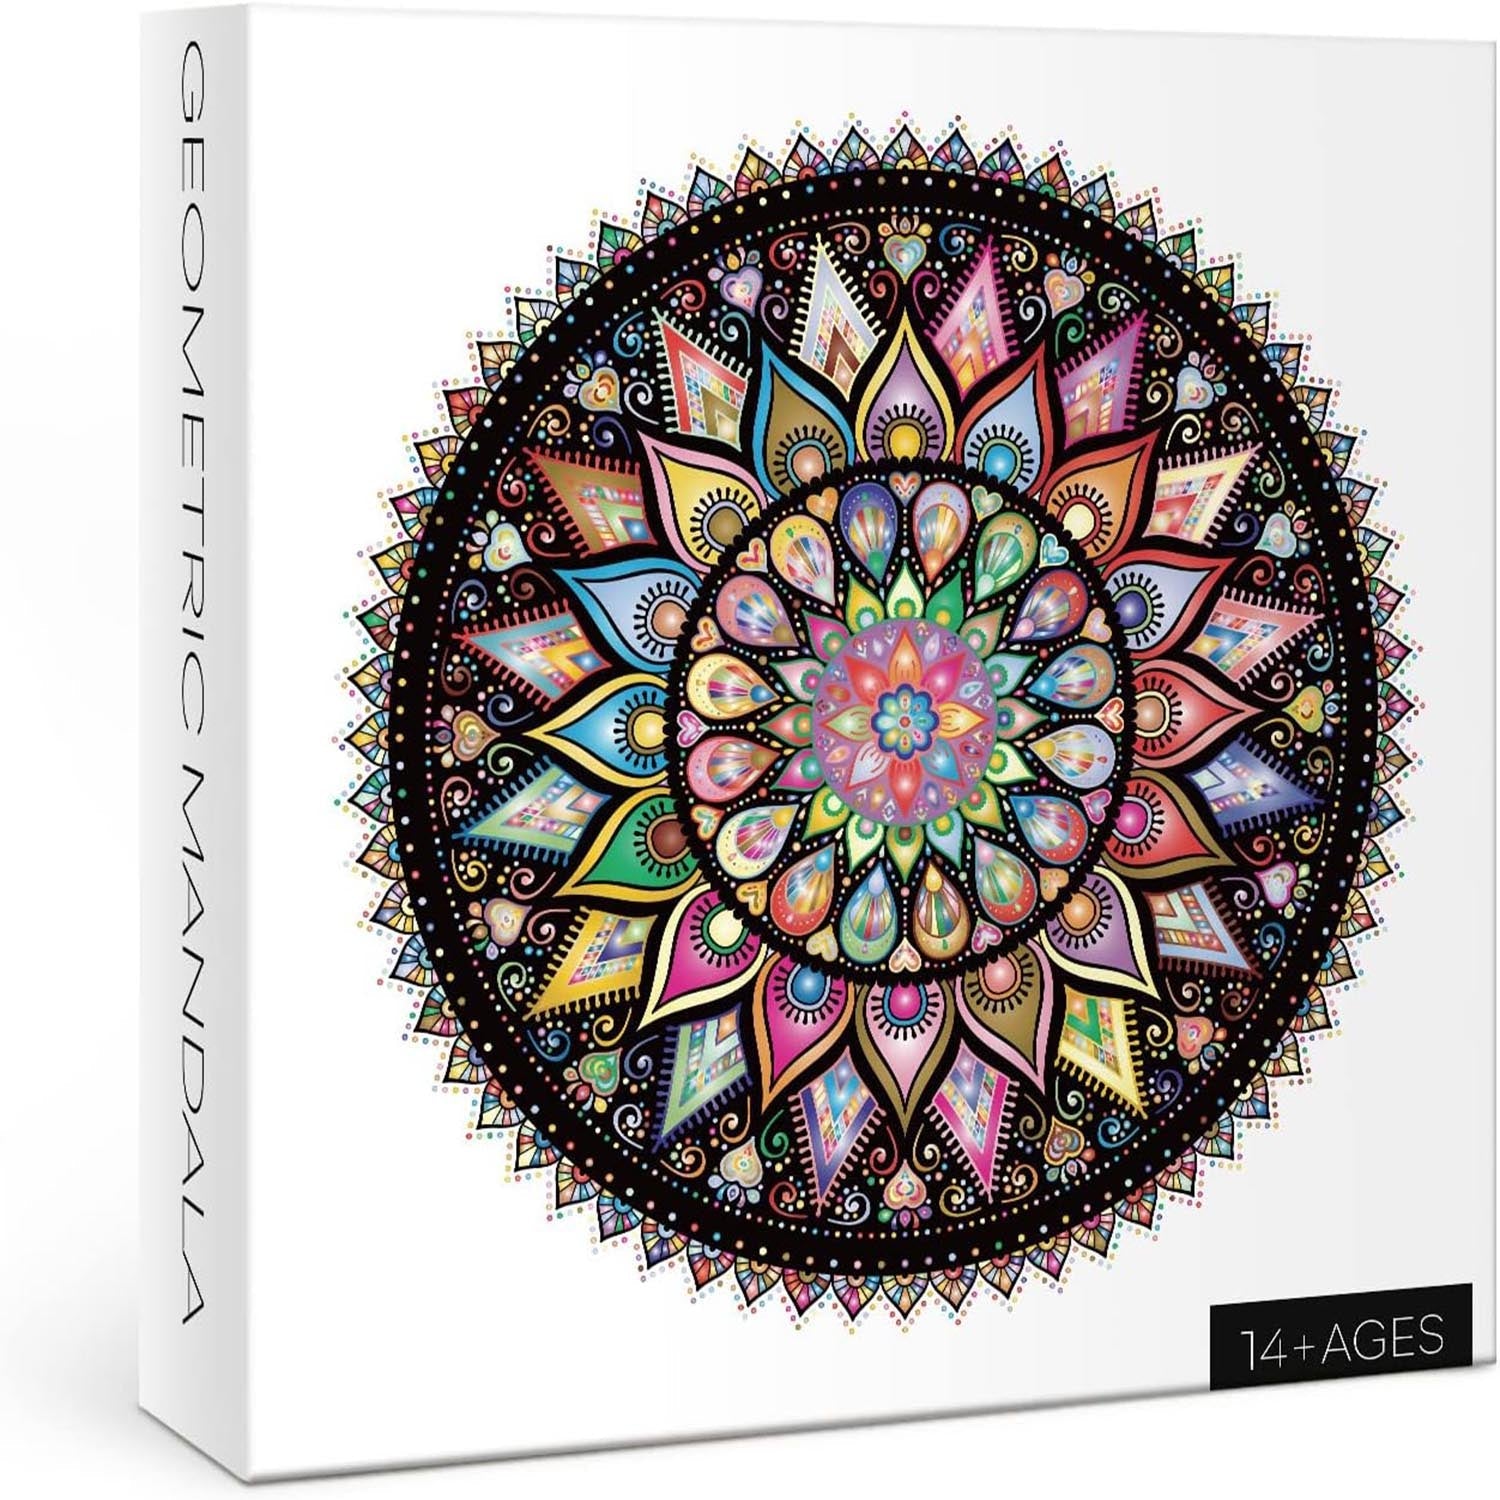 Geometric Mandala Jigsaw Puzzle 1000 Pieces